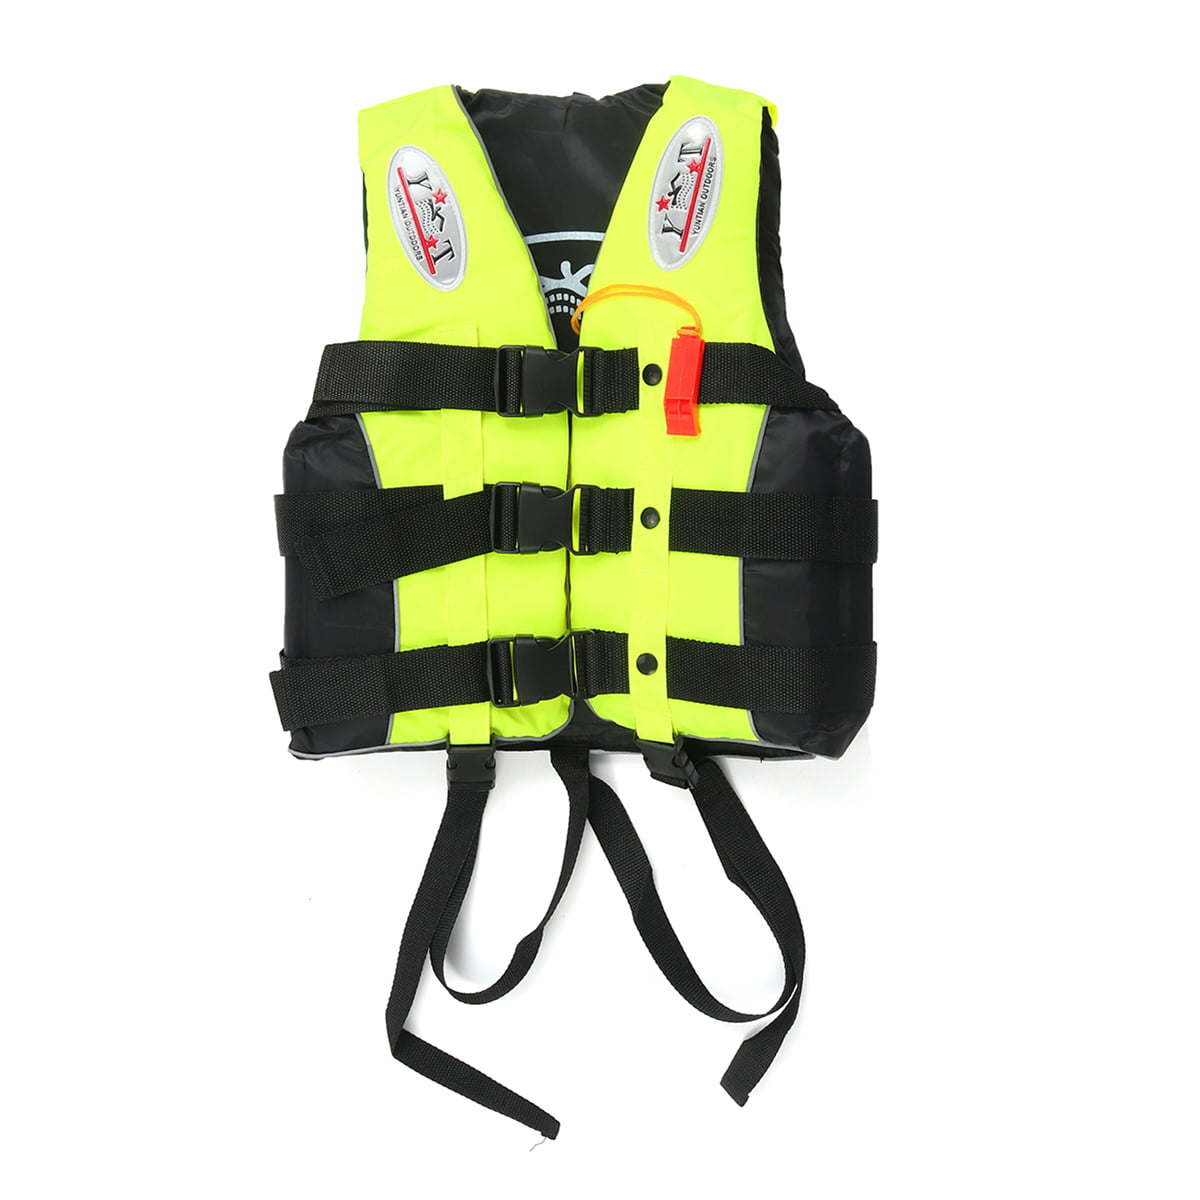 Adult Sports Swim Kayak Lifesaving Buoyancy Aid Life Jacket Vest Drifting Yellow 